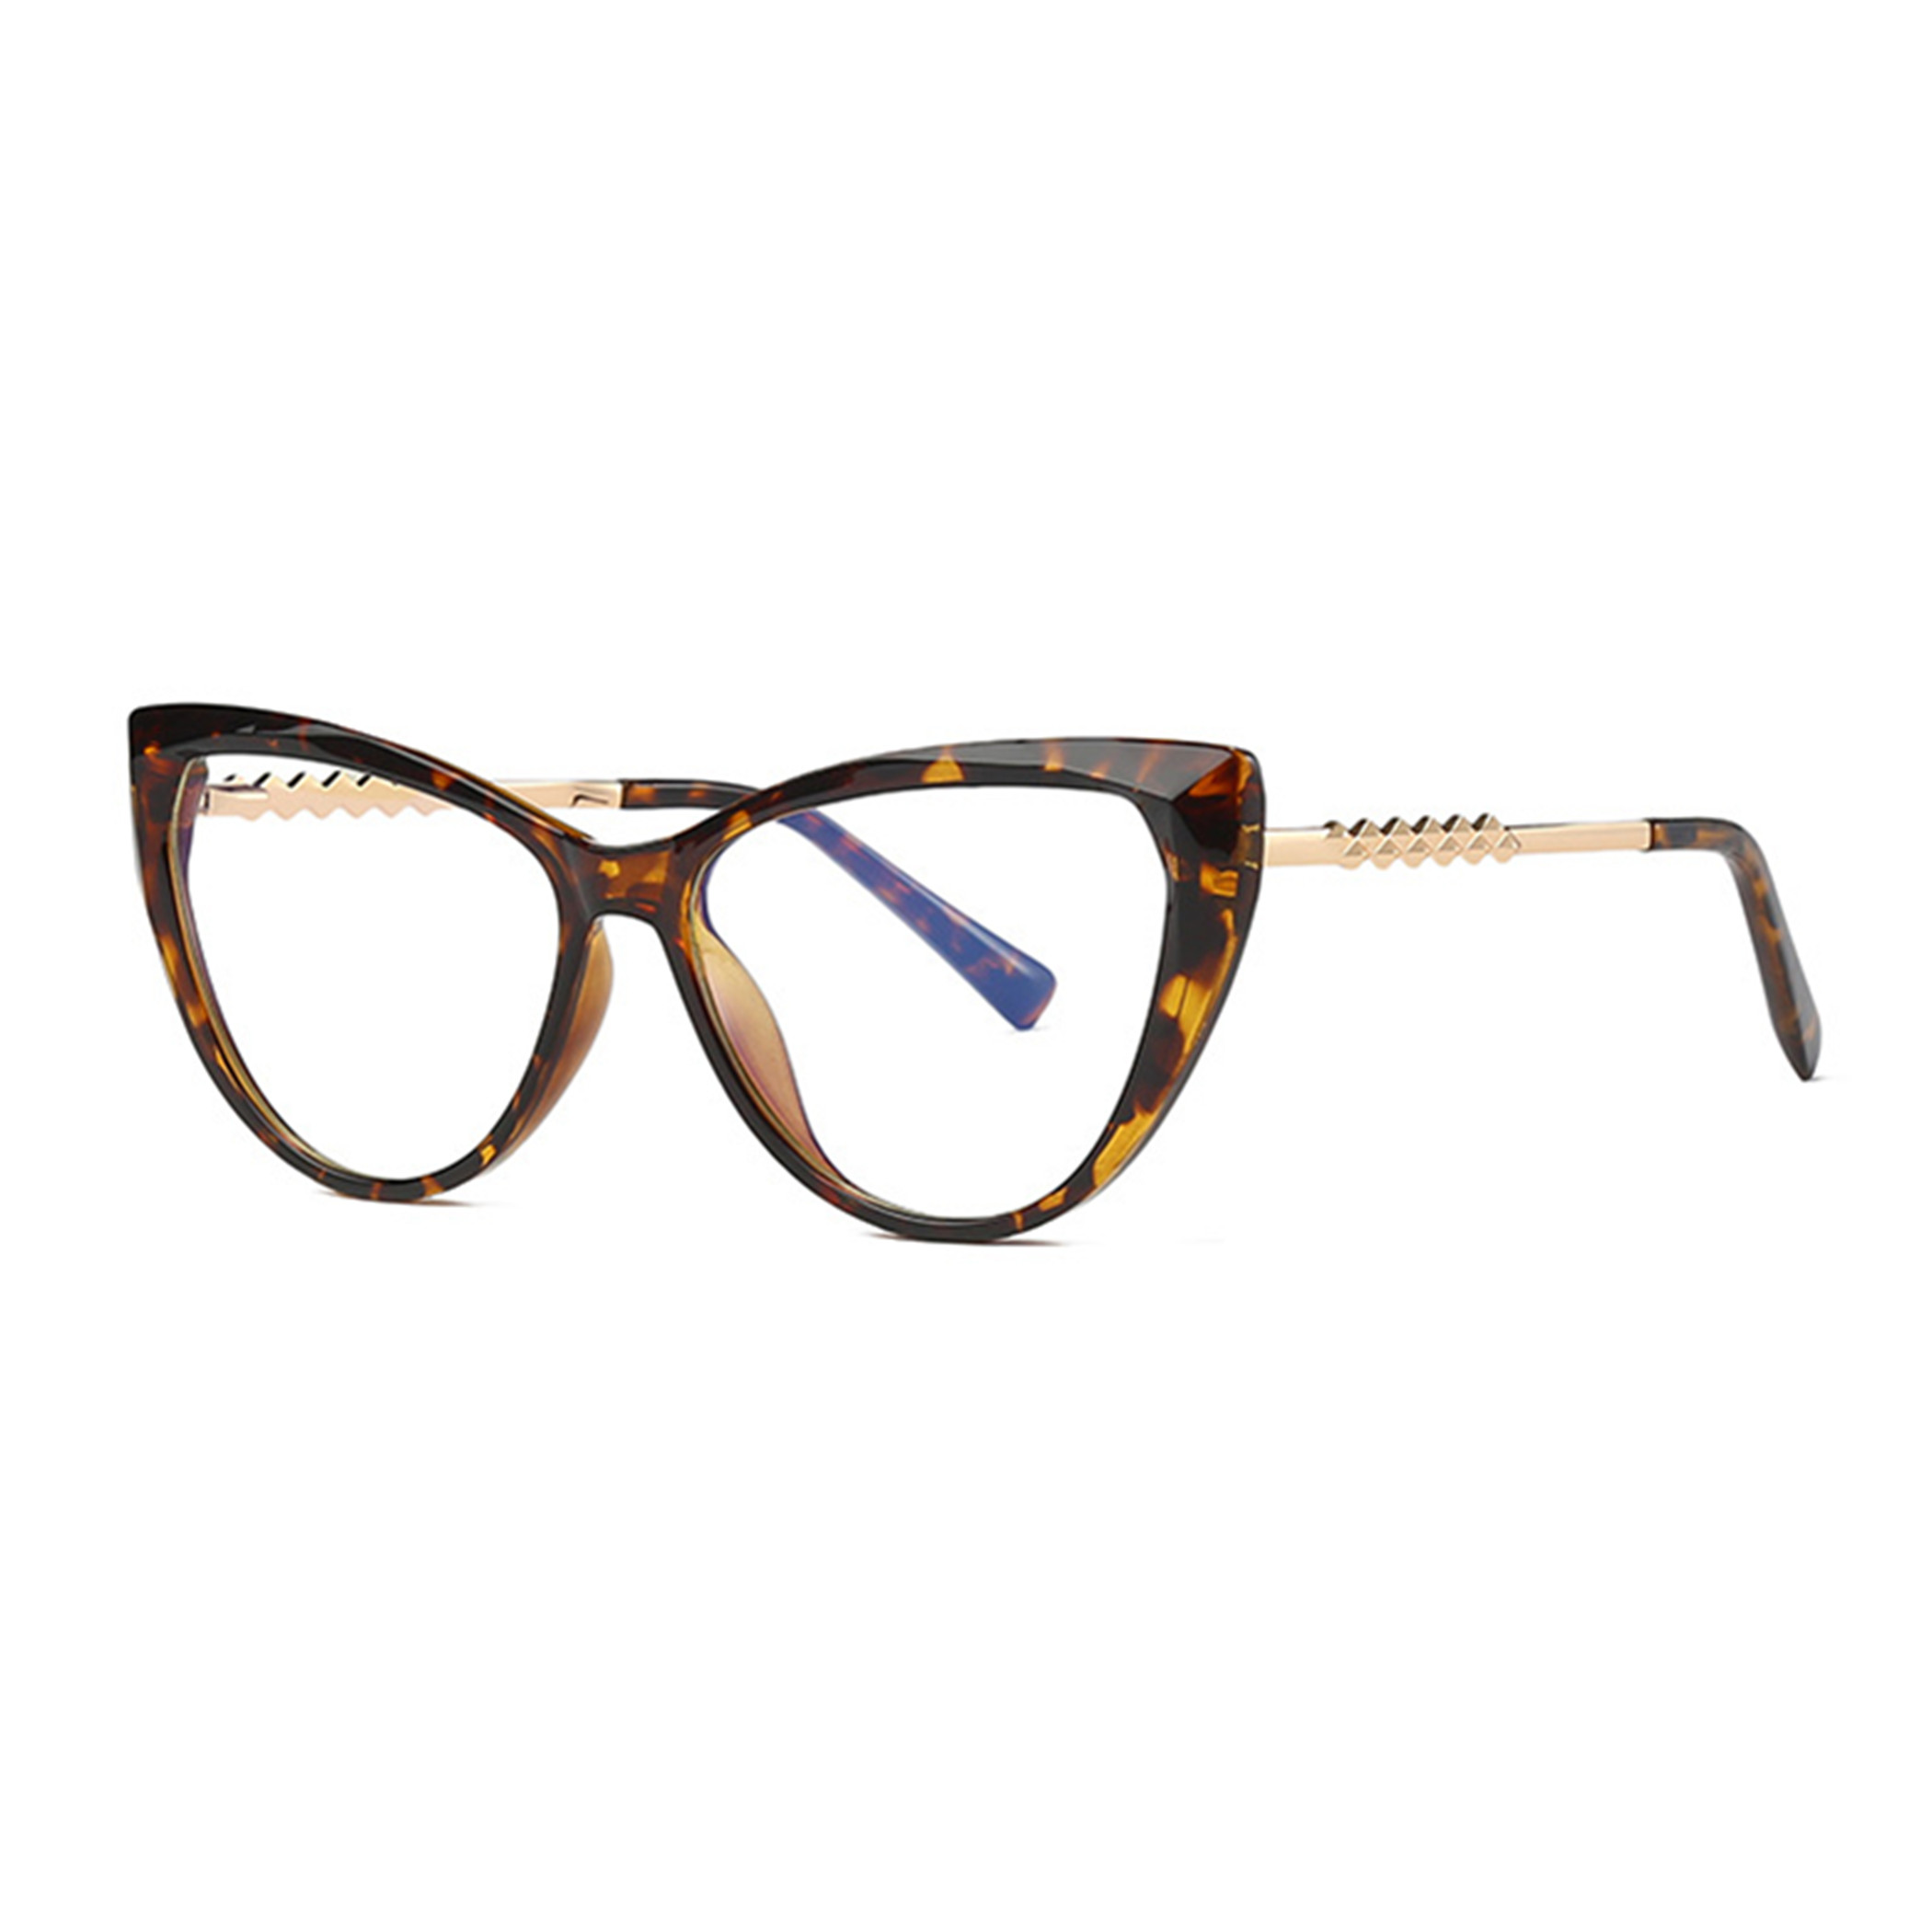 holdone Sunglasses Frames Cateye Anti Blue Light Blocking Computer Glasses Fashion Women Eyeglasses UV Clear Lens